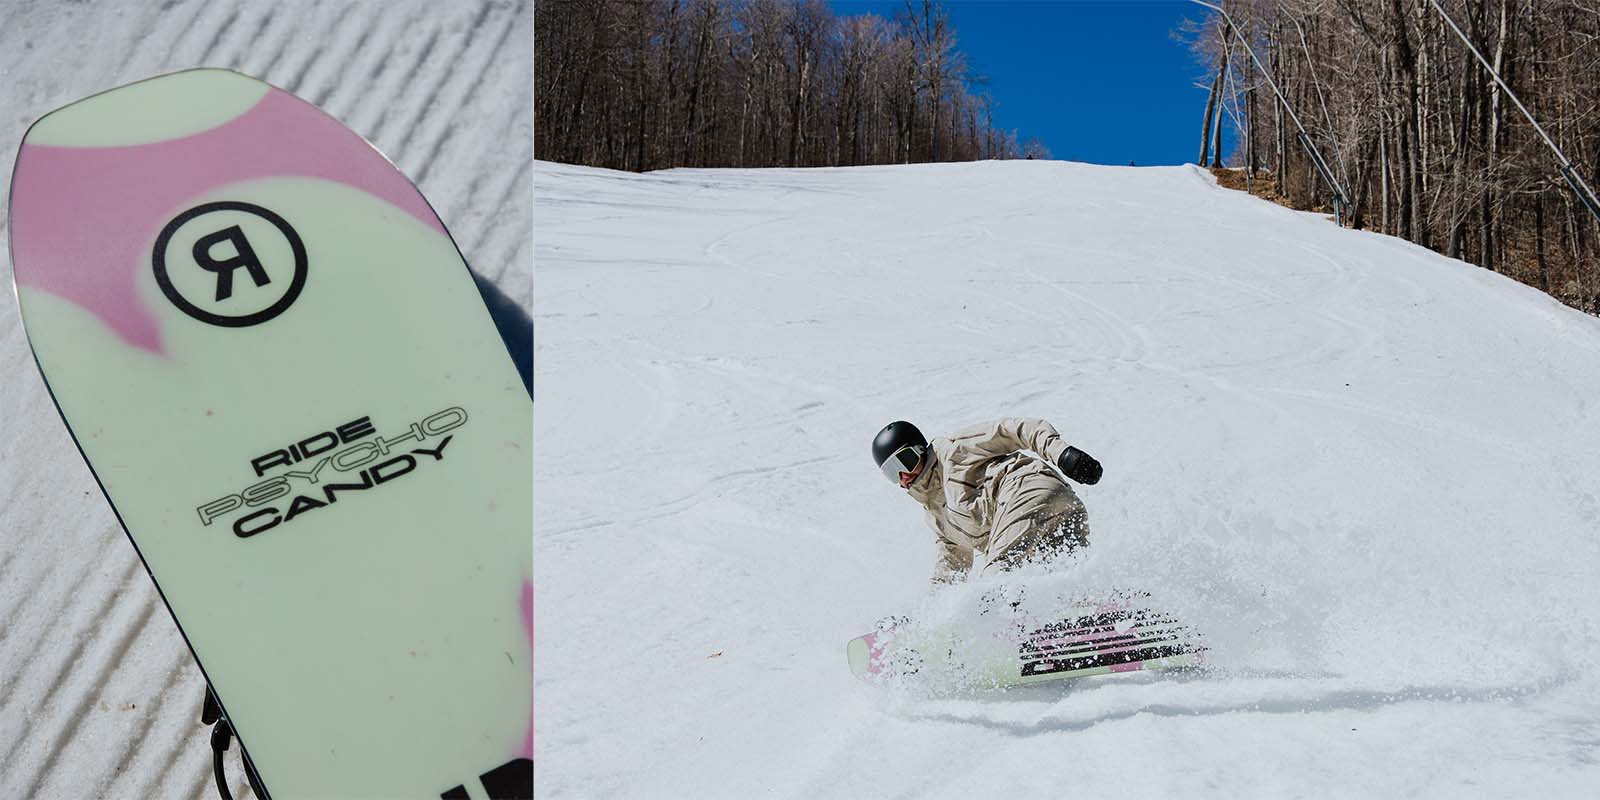 The Ski Monster, Sunapee Mountain, TSM, New Hampshire, snow, winter, snowboard, snowboarding, Ride, Ride Psychocandy